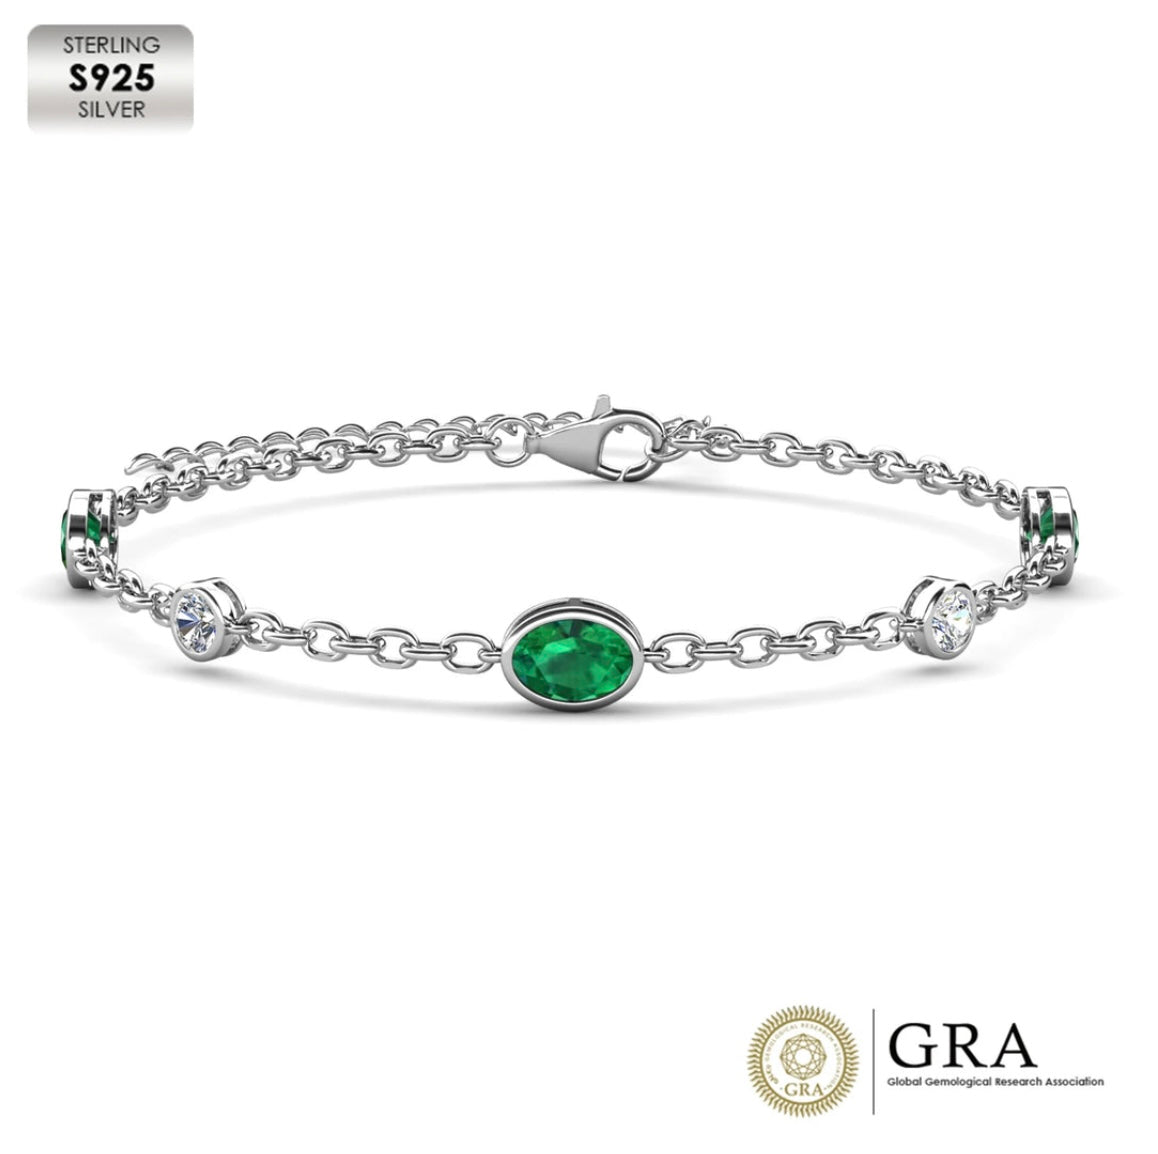 Emerald Station Bracelet